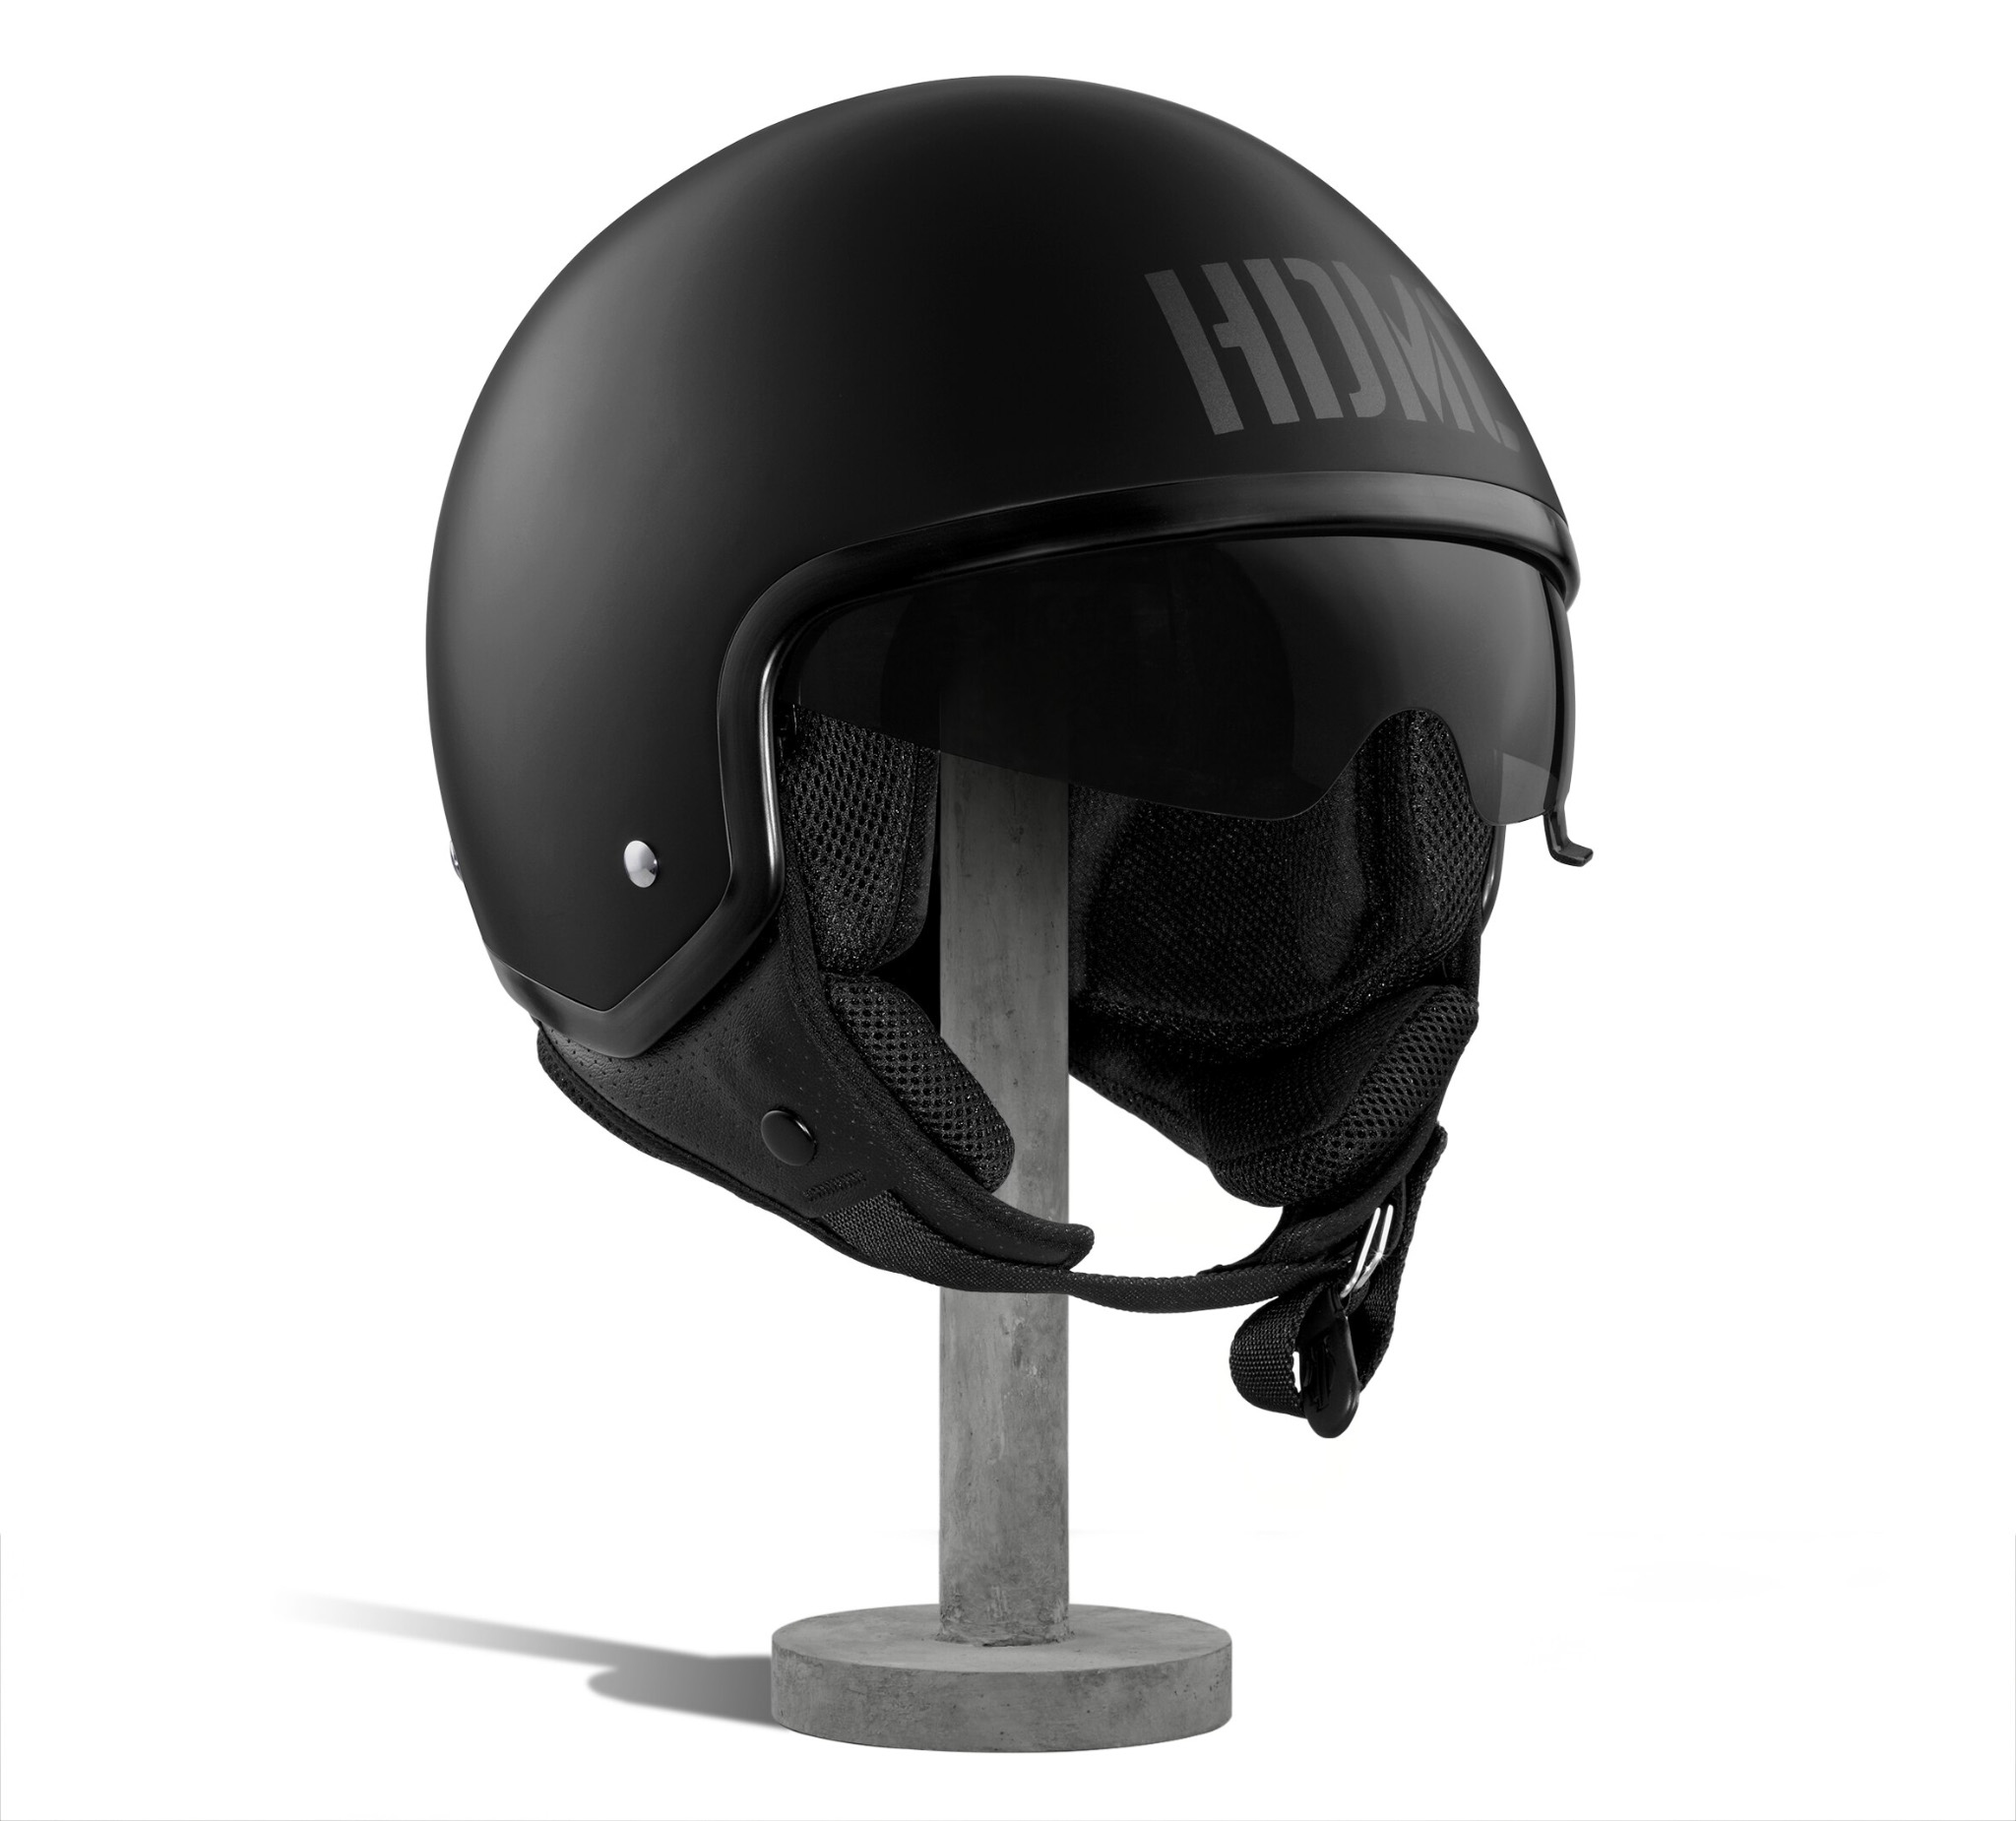 Unisex Adults Bike Motorcycling Helmet with Back Light Visor UV Protective S5E5 